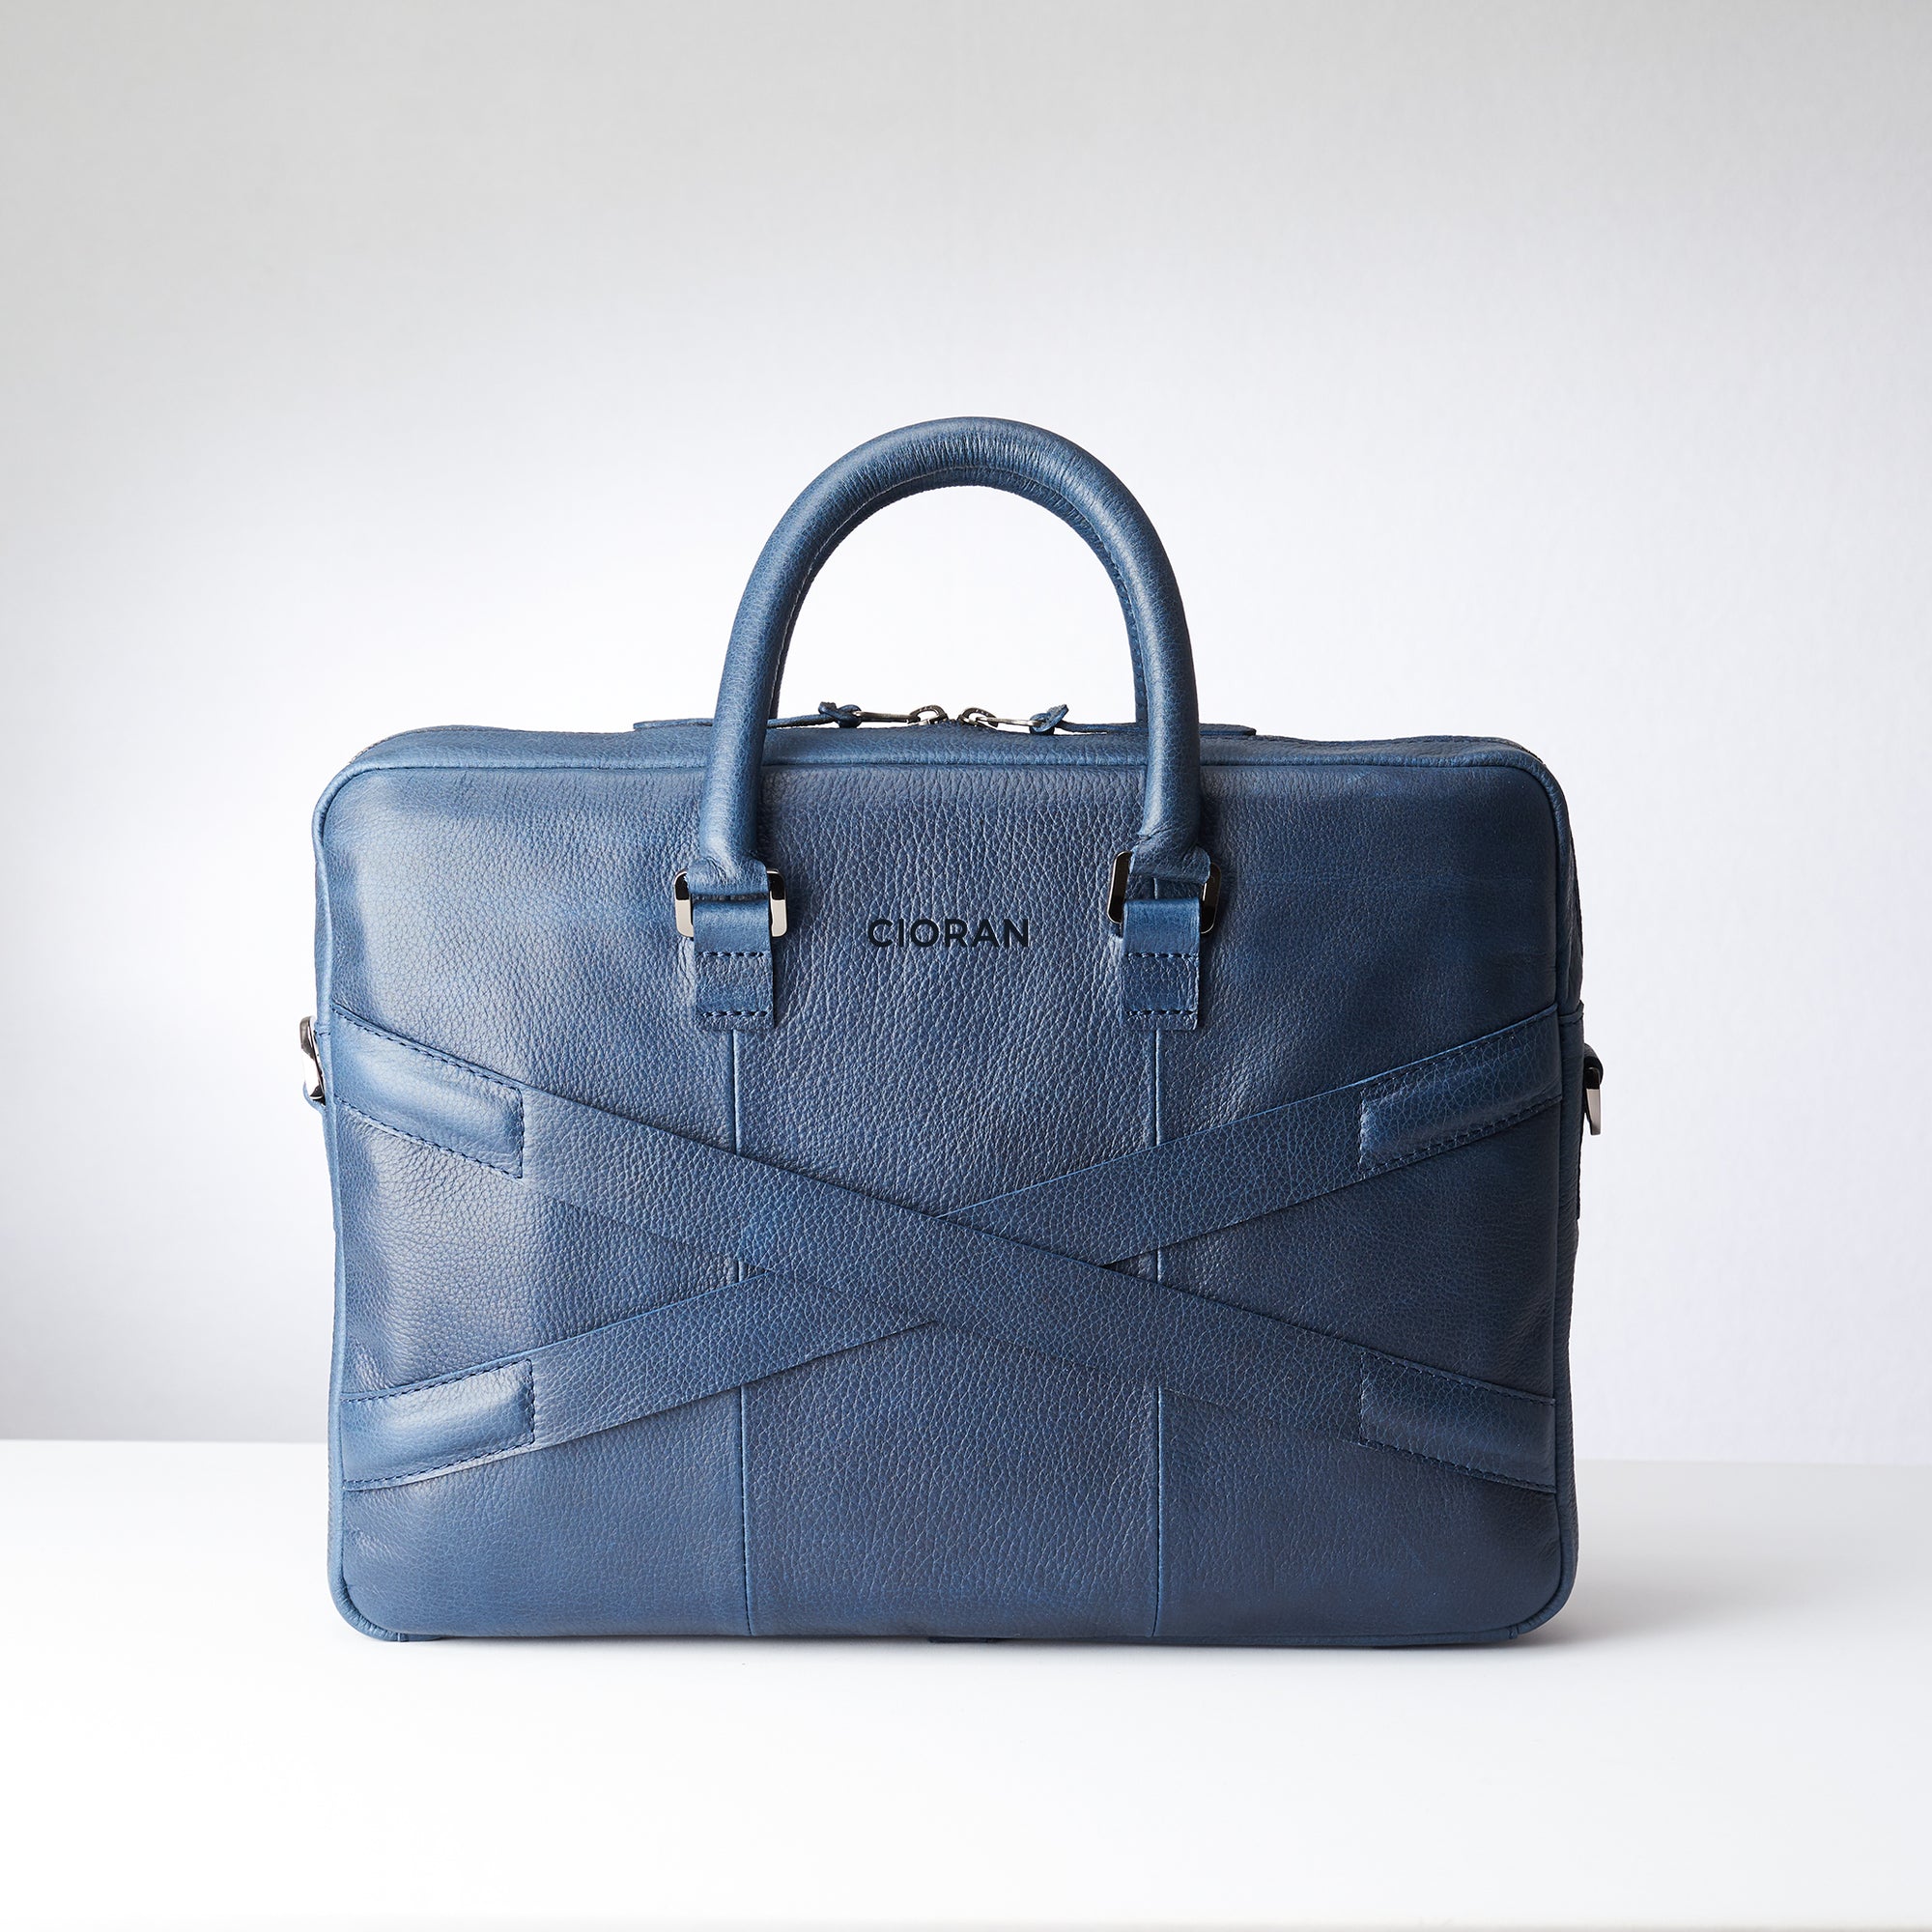 Back and luggage strap for slim portfolio .Blue leather briefcase laptop bag for men. Gazeli laptop briefcase by Capra Leather.